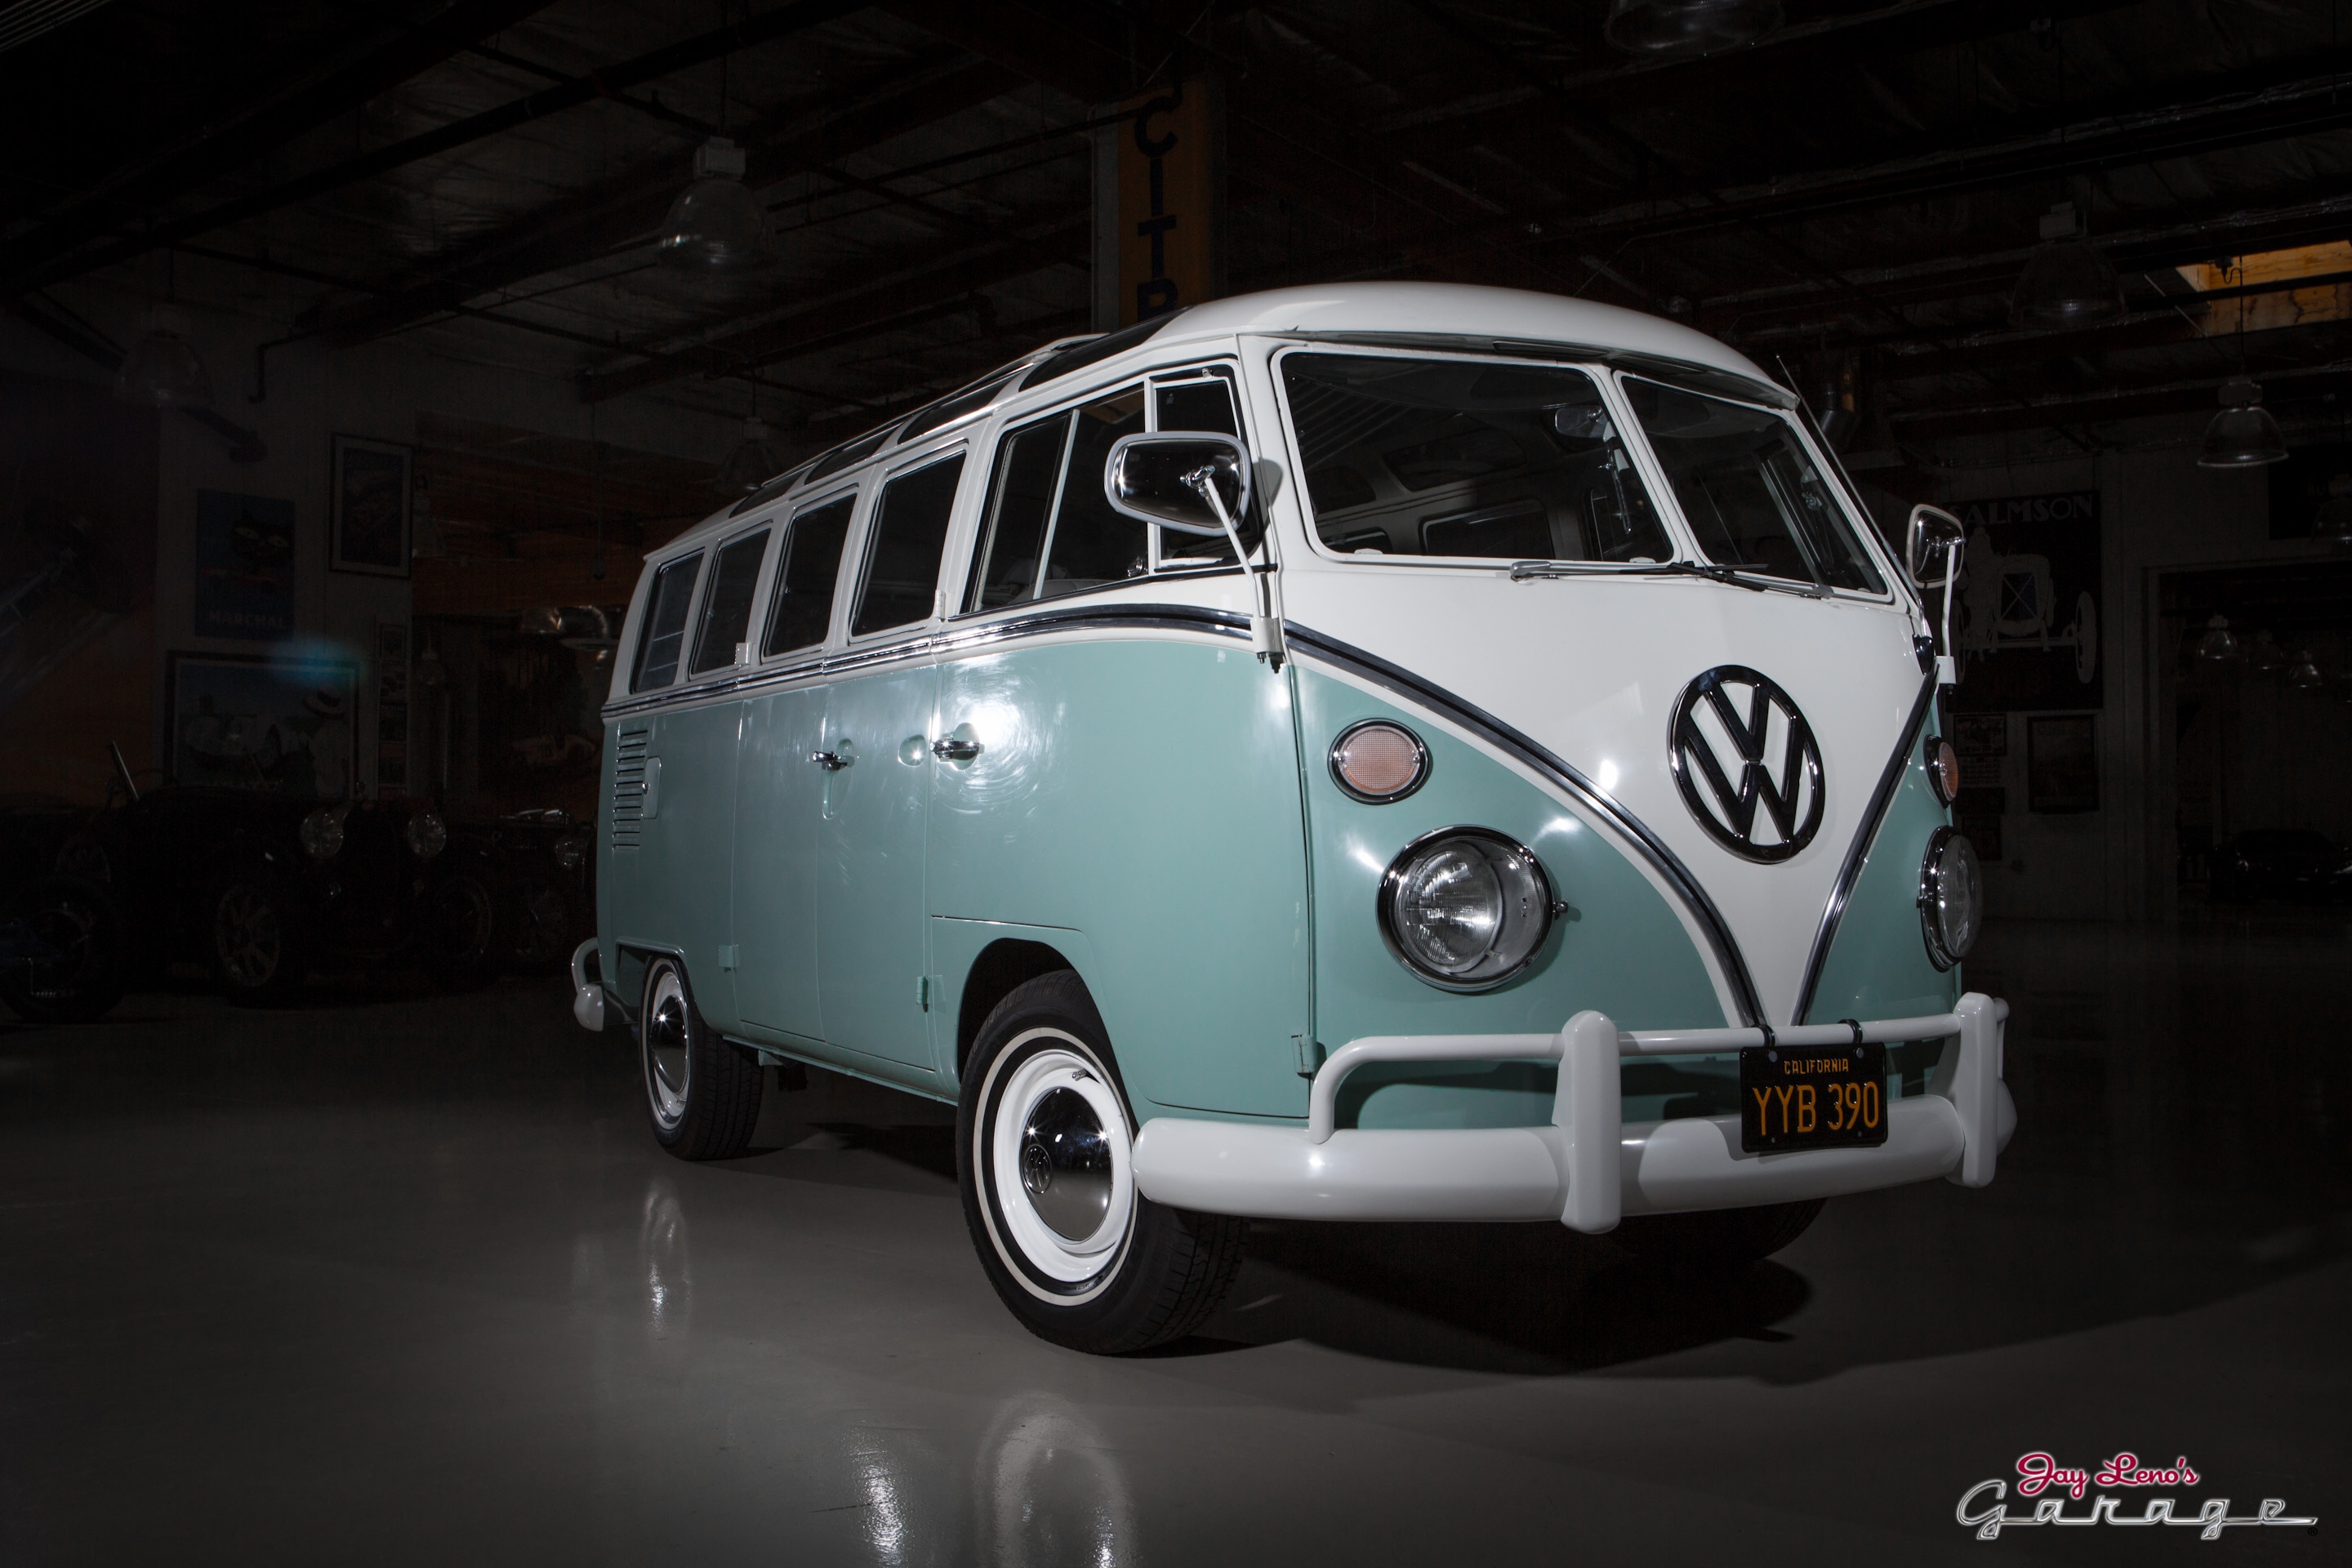 Jay Leno's Garage: 1966 VW Bus Photo: 2213716 - NBC.com